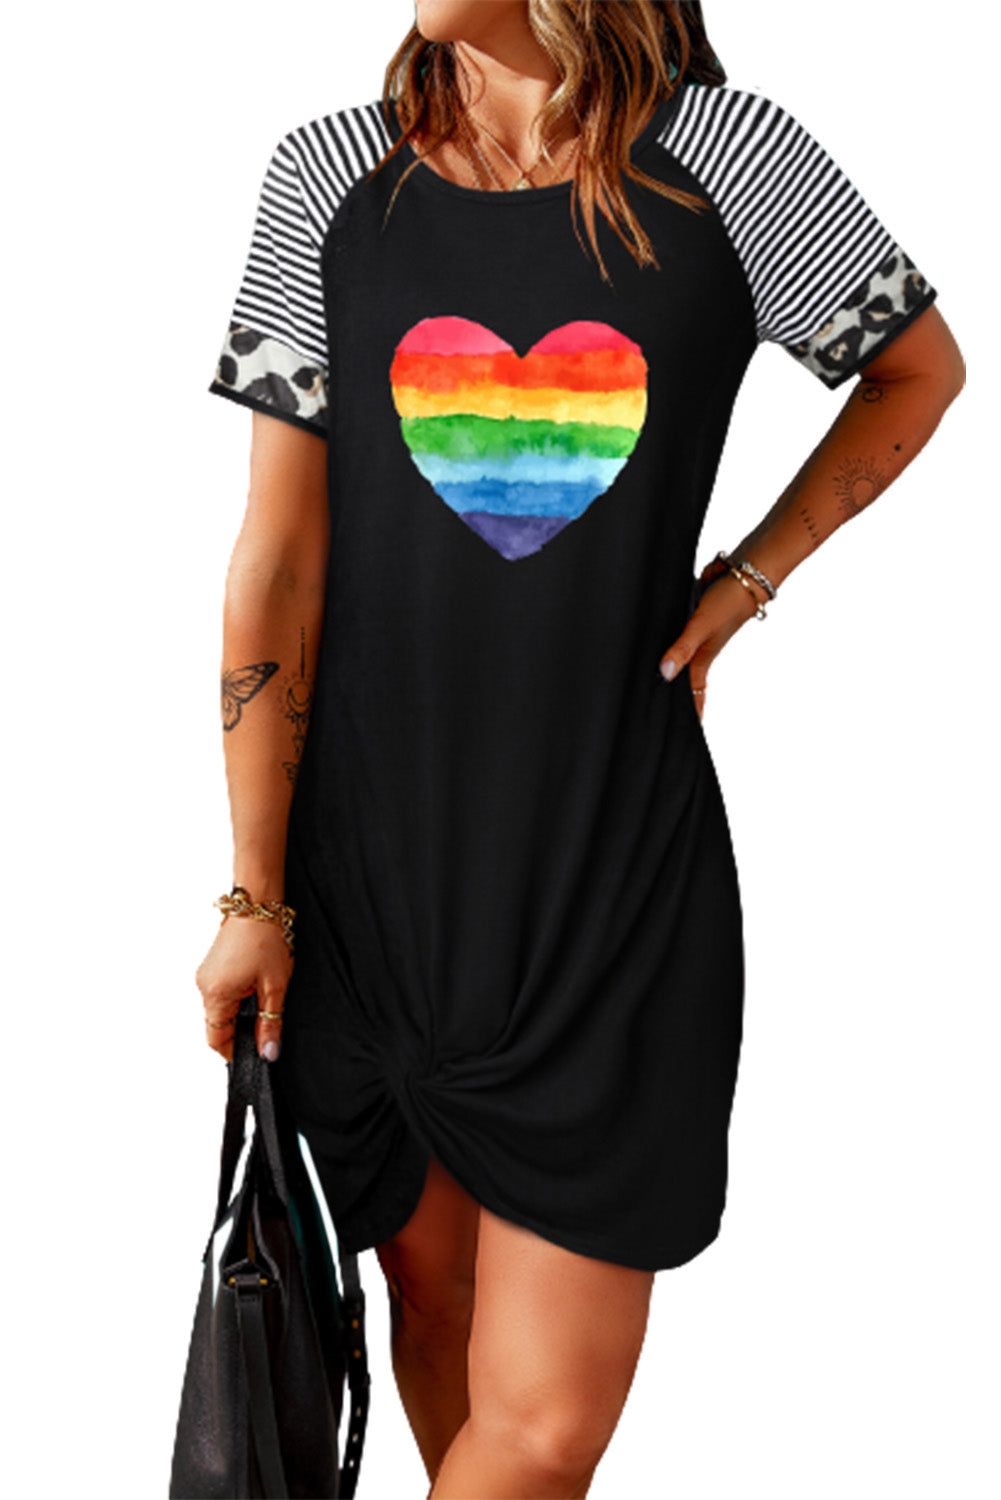 LC6110737-2-S, LC6110737-2-M, LC6110737-2-L, LC6110737-2-XL, Black Womens Pride Rainbow Heart Shape Mini Dress Striped Short Sleeve Dresses